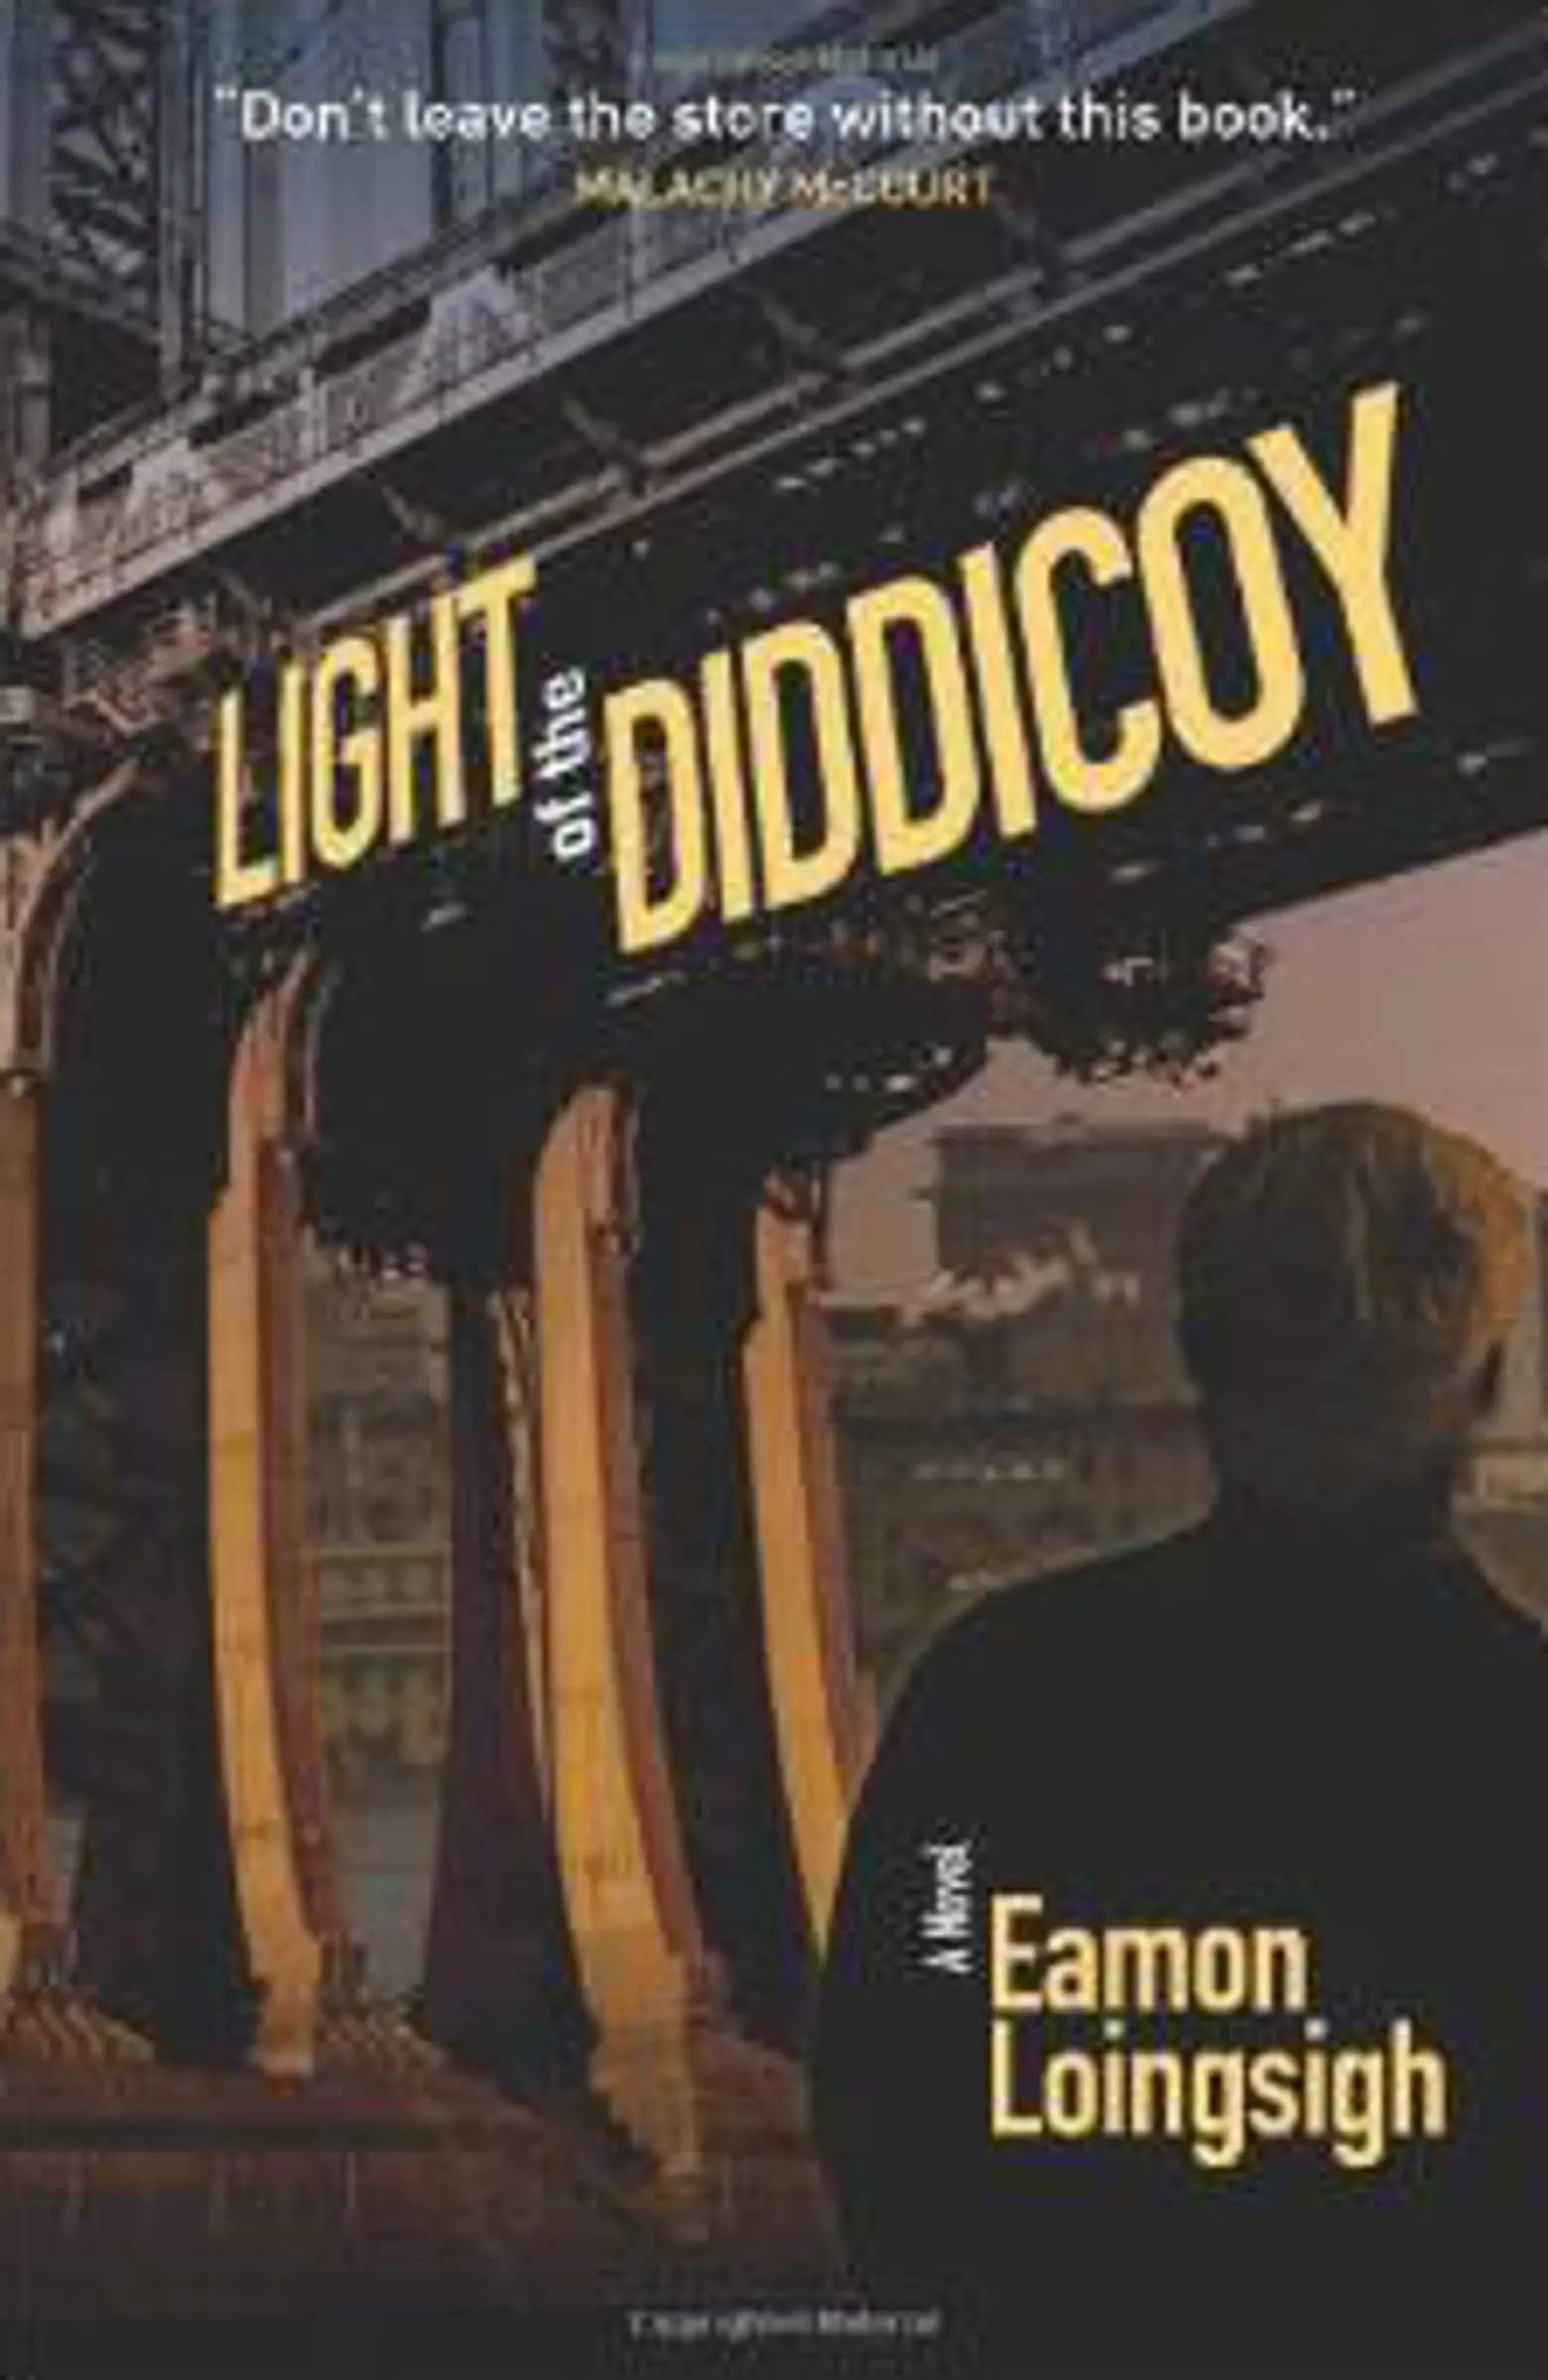 Eamon Loingsigh, Light of the Diddicoy